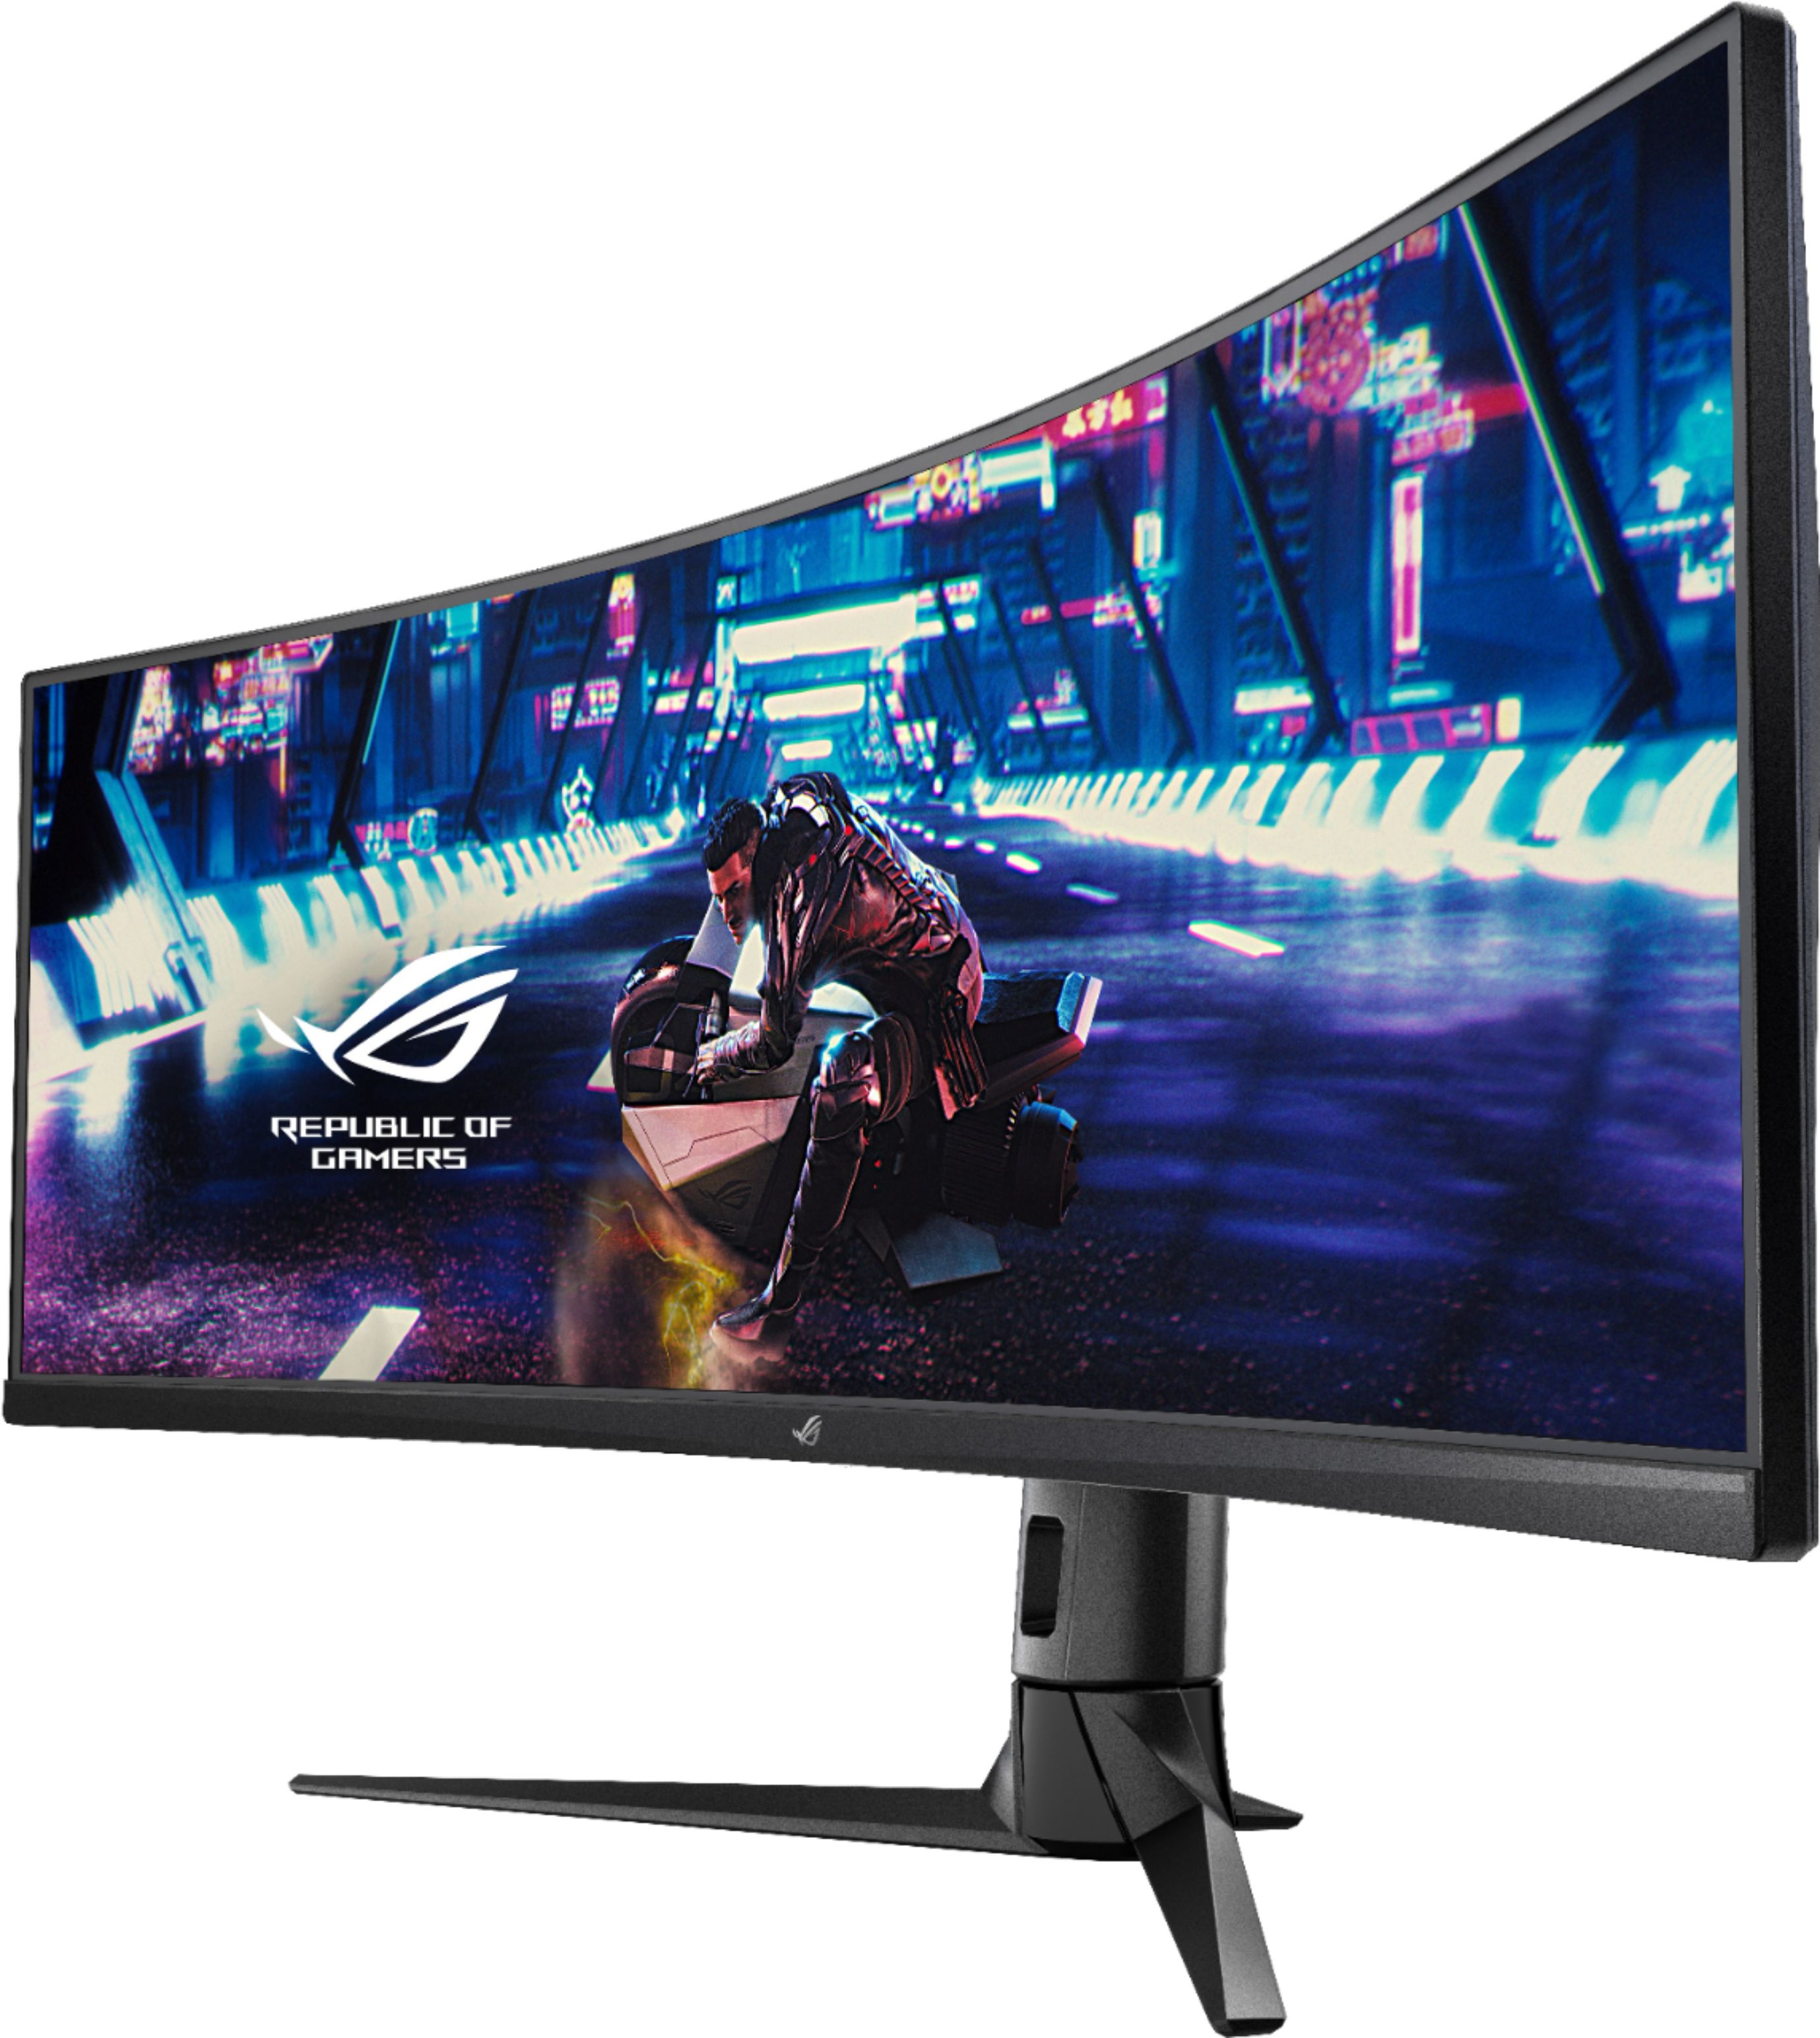 ROG ASUS 144Hz HDR (DisplayPort,HDMI,USB) Best Black Buy: 49” Curved Monitor XG49VQ FreeSync FHD Gaming Strix with